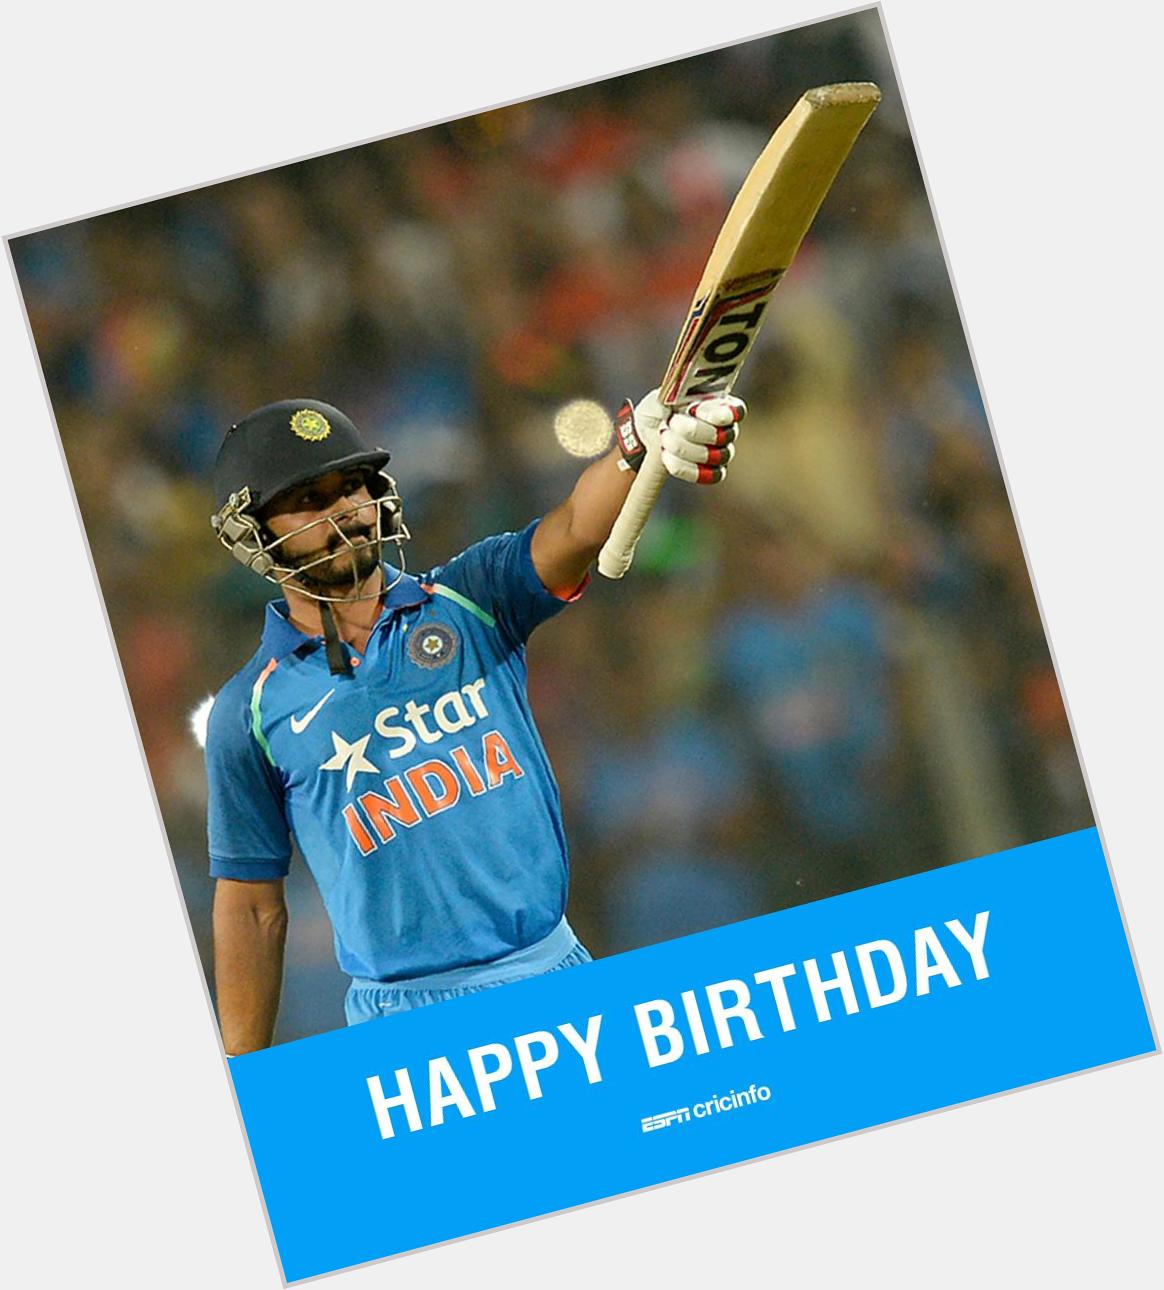  Happy Birthday to Kedar Jadhav! 

The Indian batsman turns 34 today

 